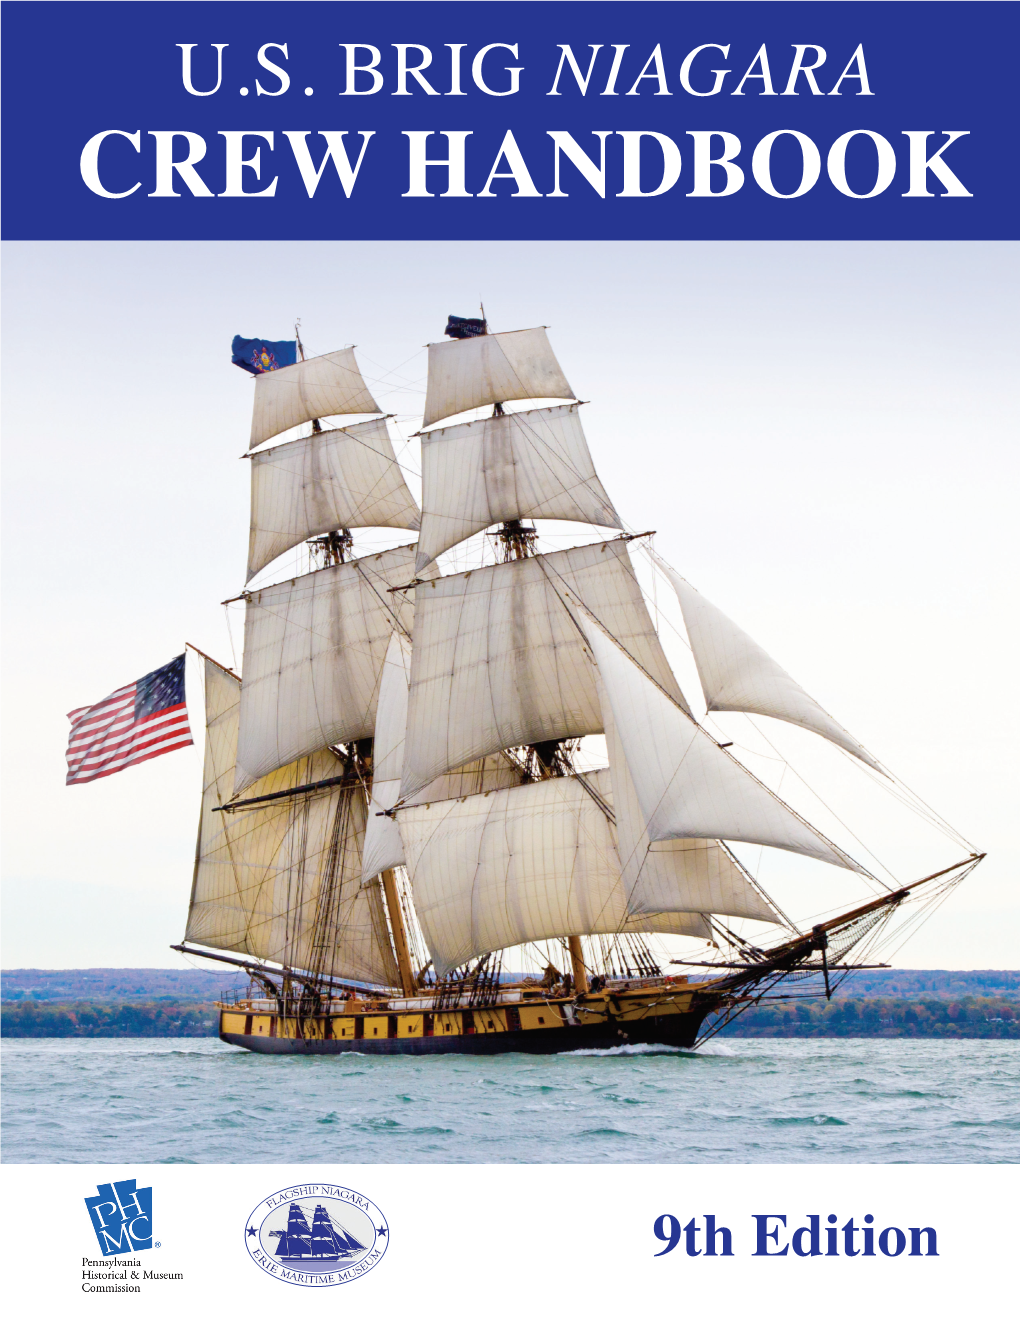 Crew Handbook